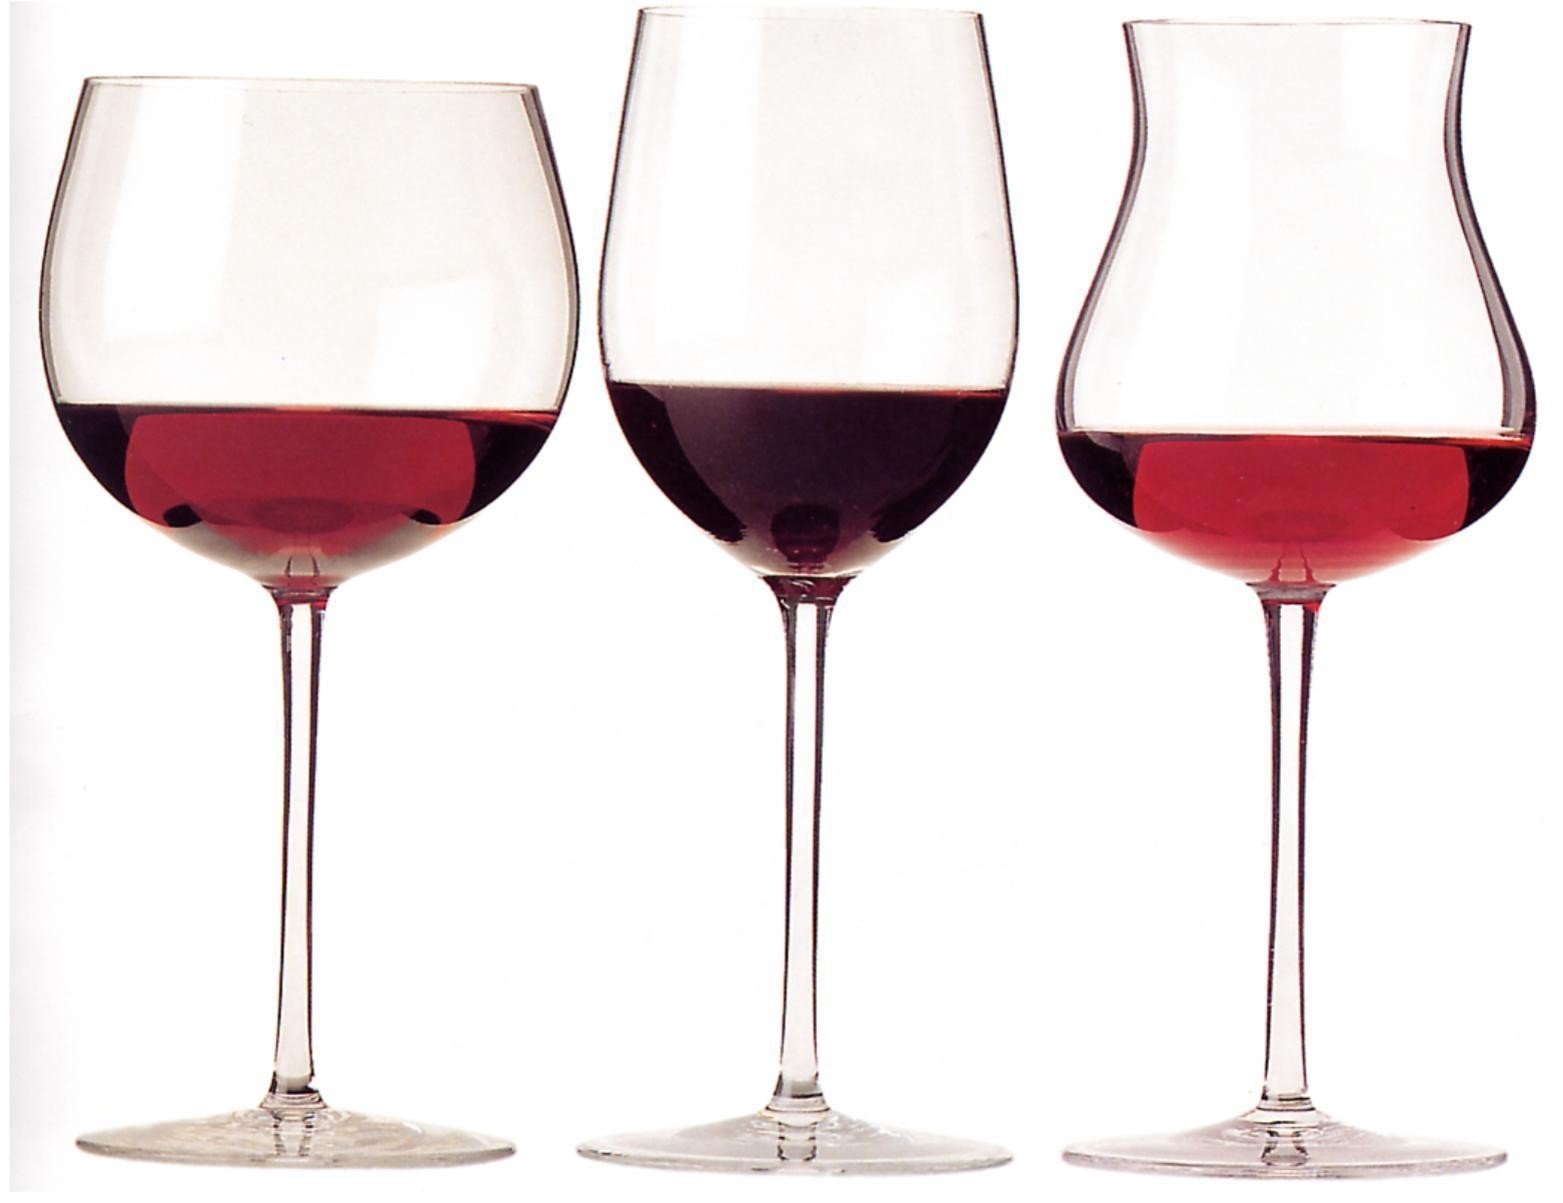 Картинка: разные бокалы вина. Характеристики вина